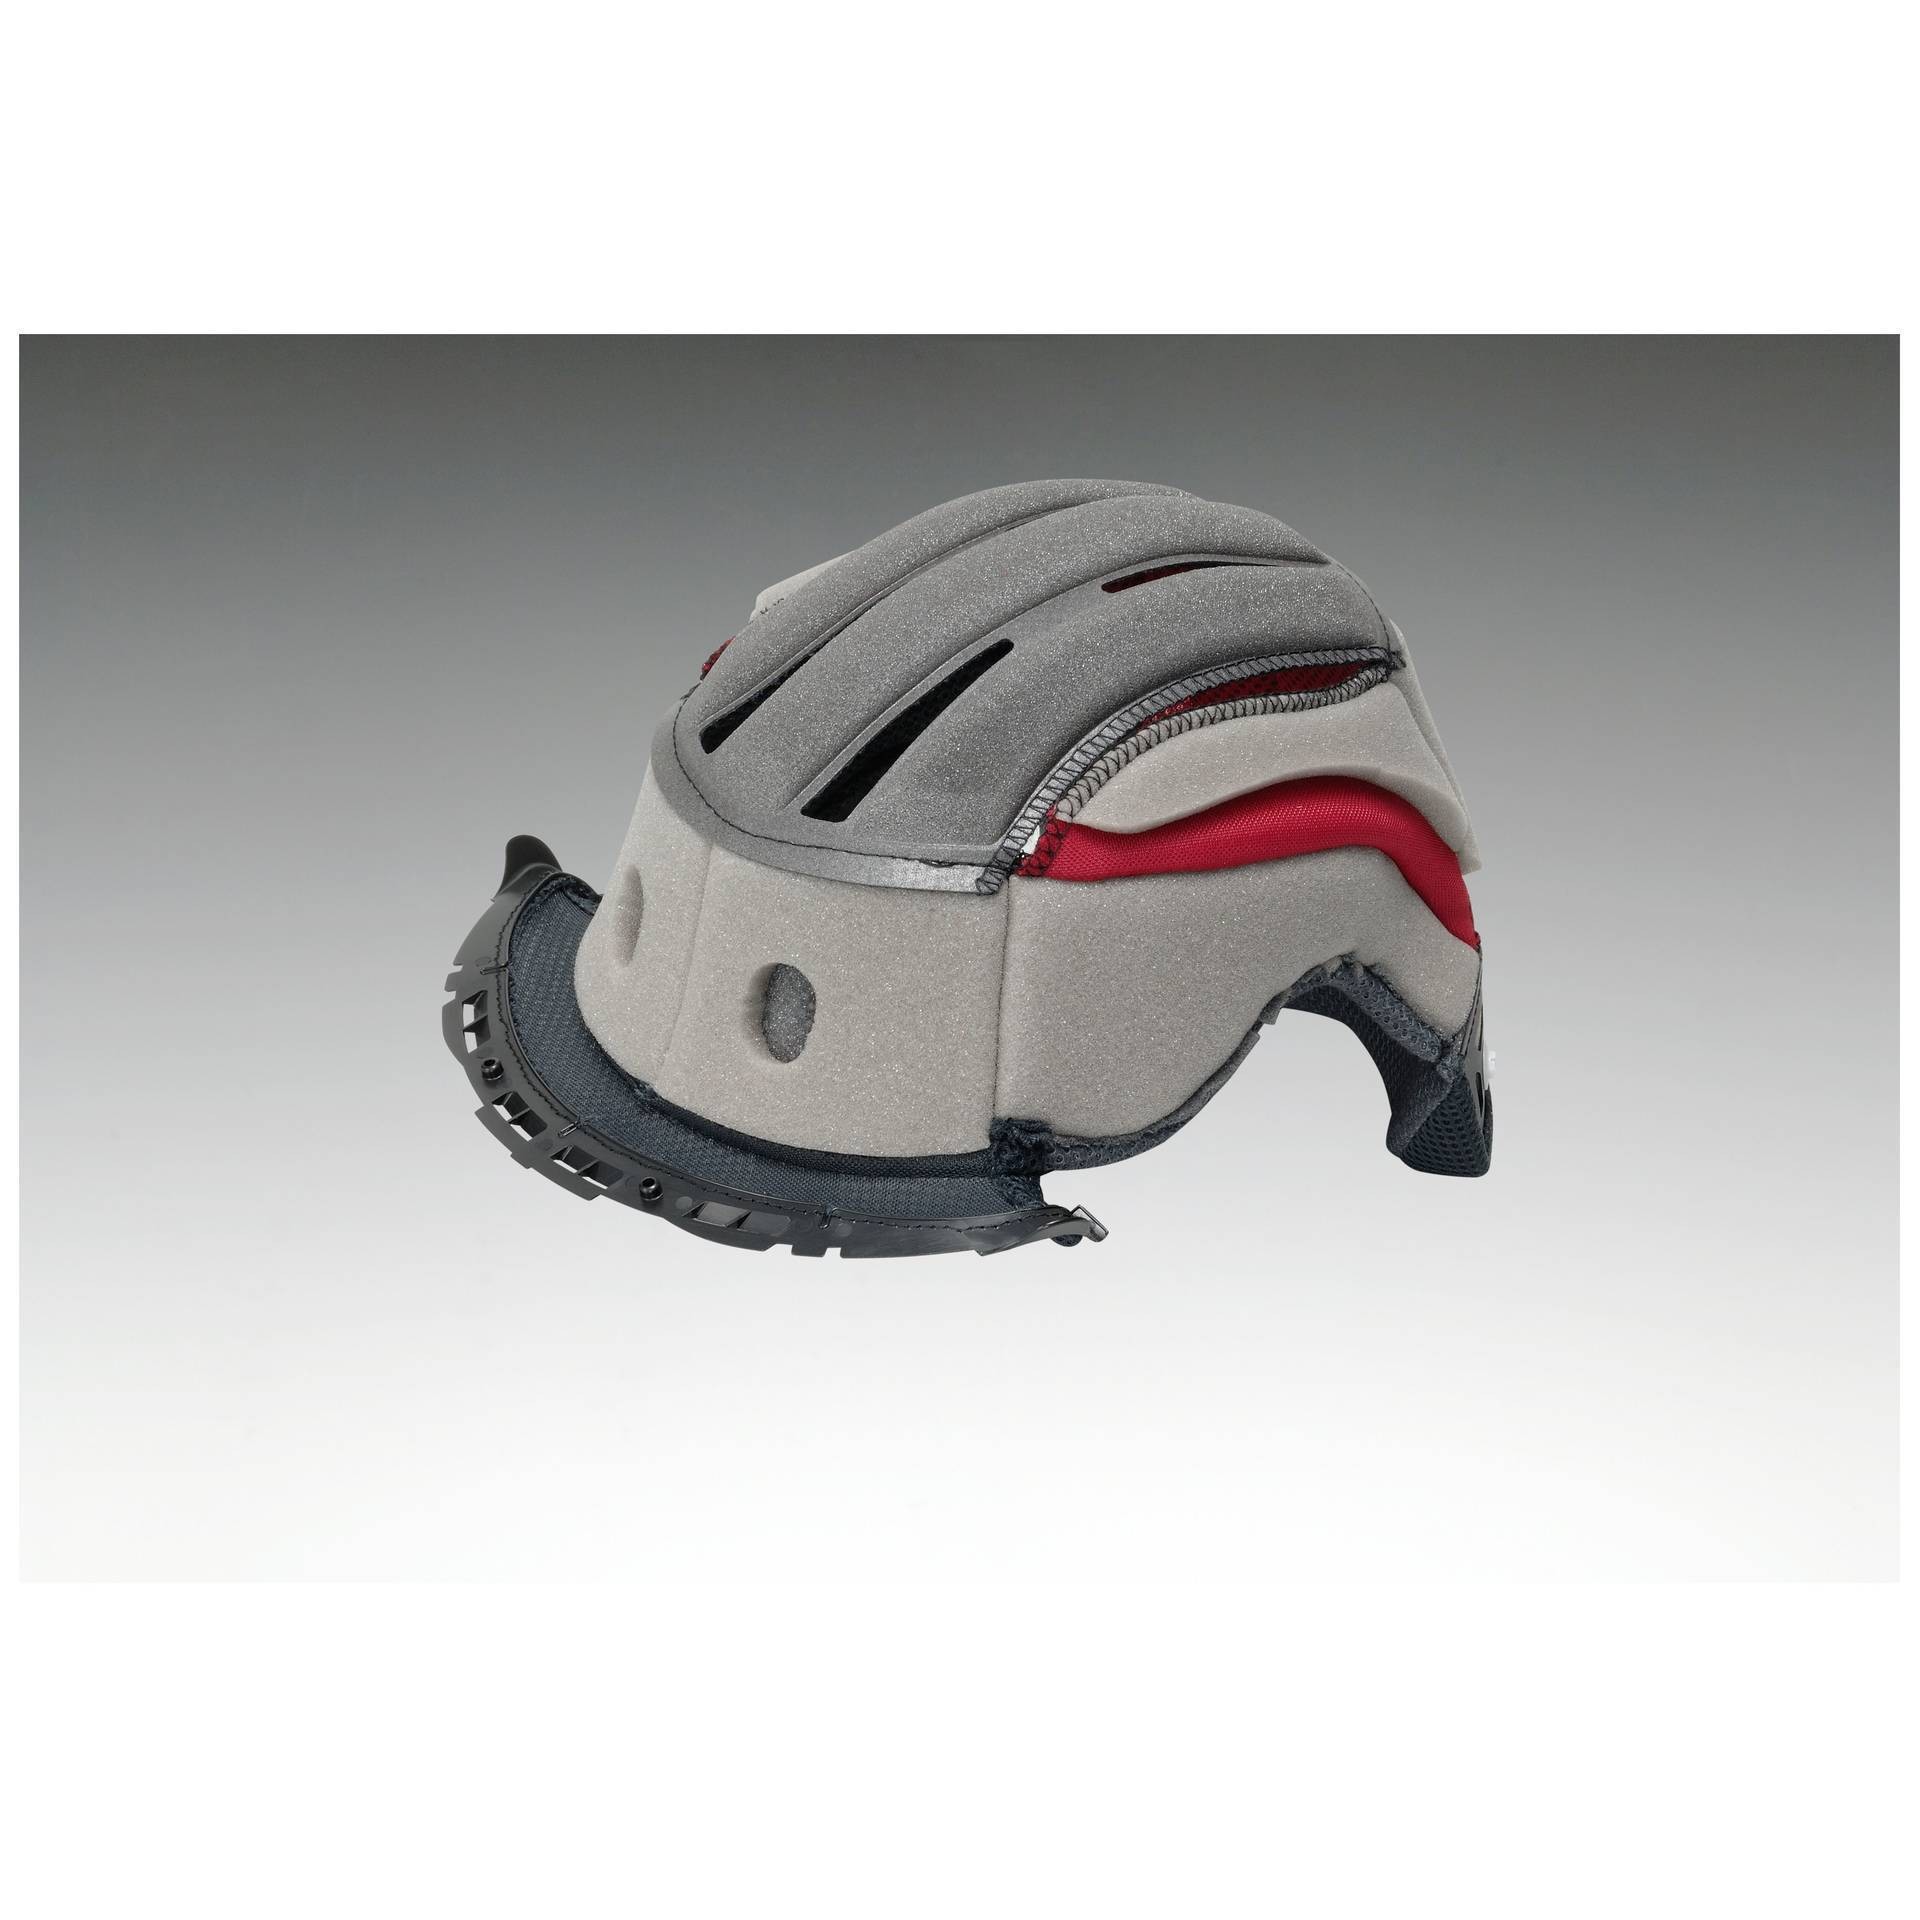 Shoei Hornet X2 Center Pad Liner - Liners - Helmet Accessories